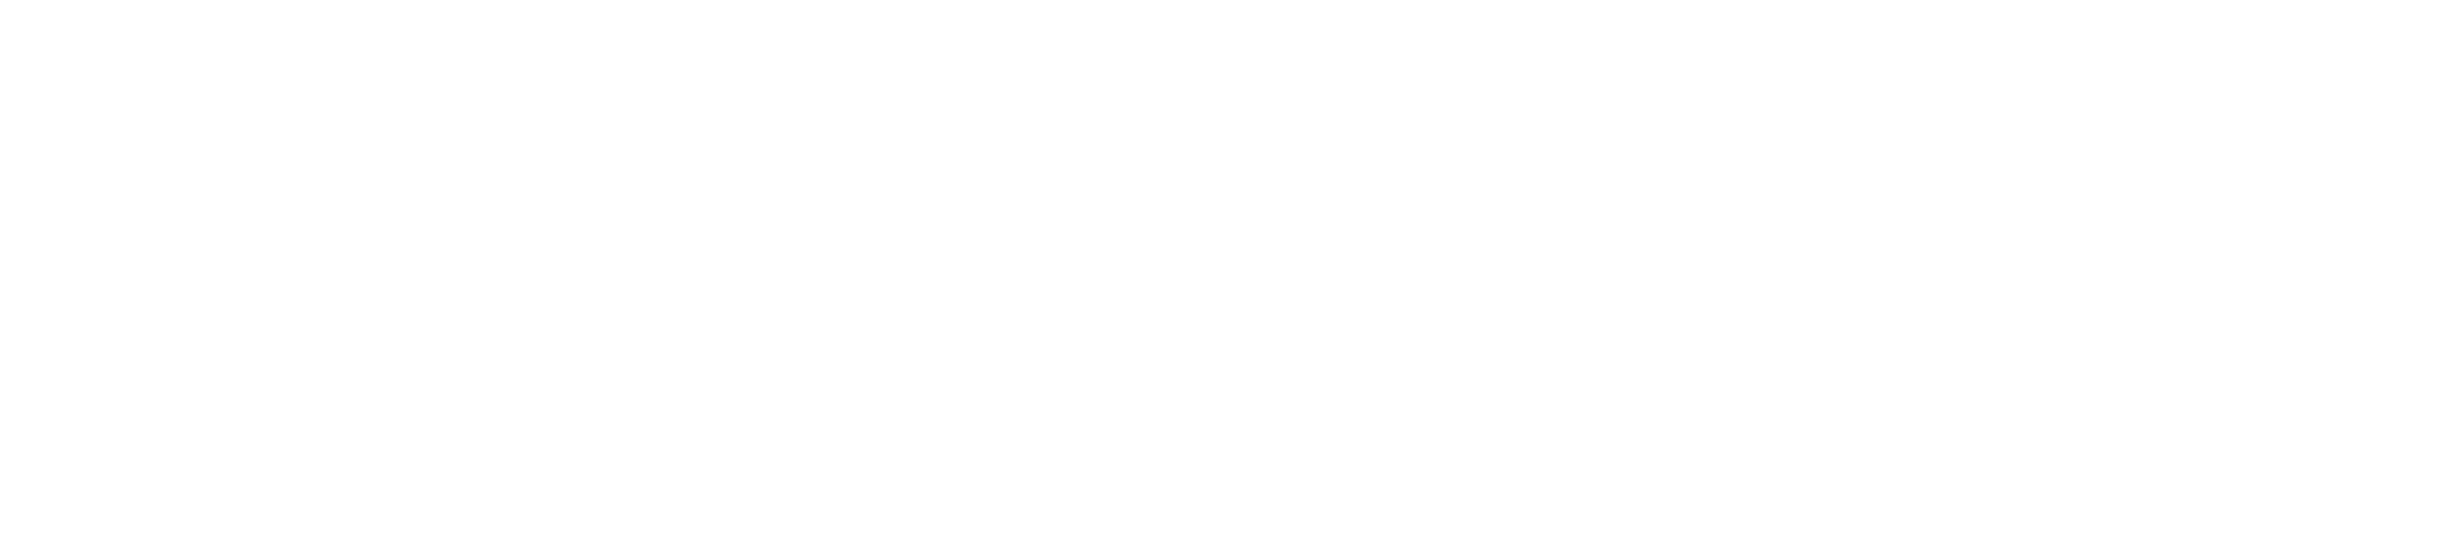 Harvest Napa Valley